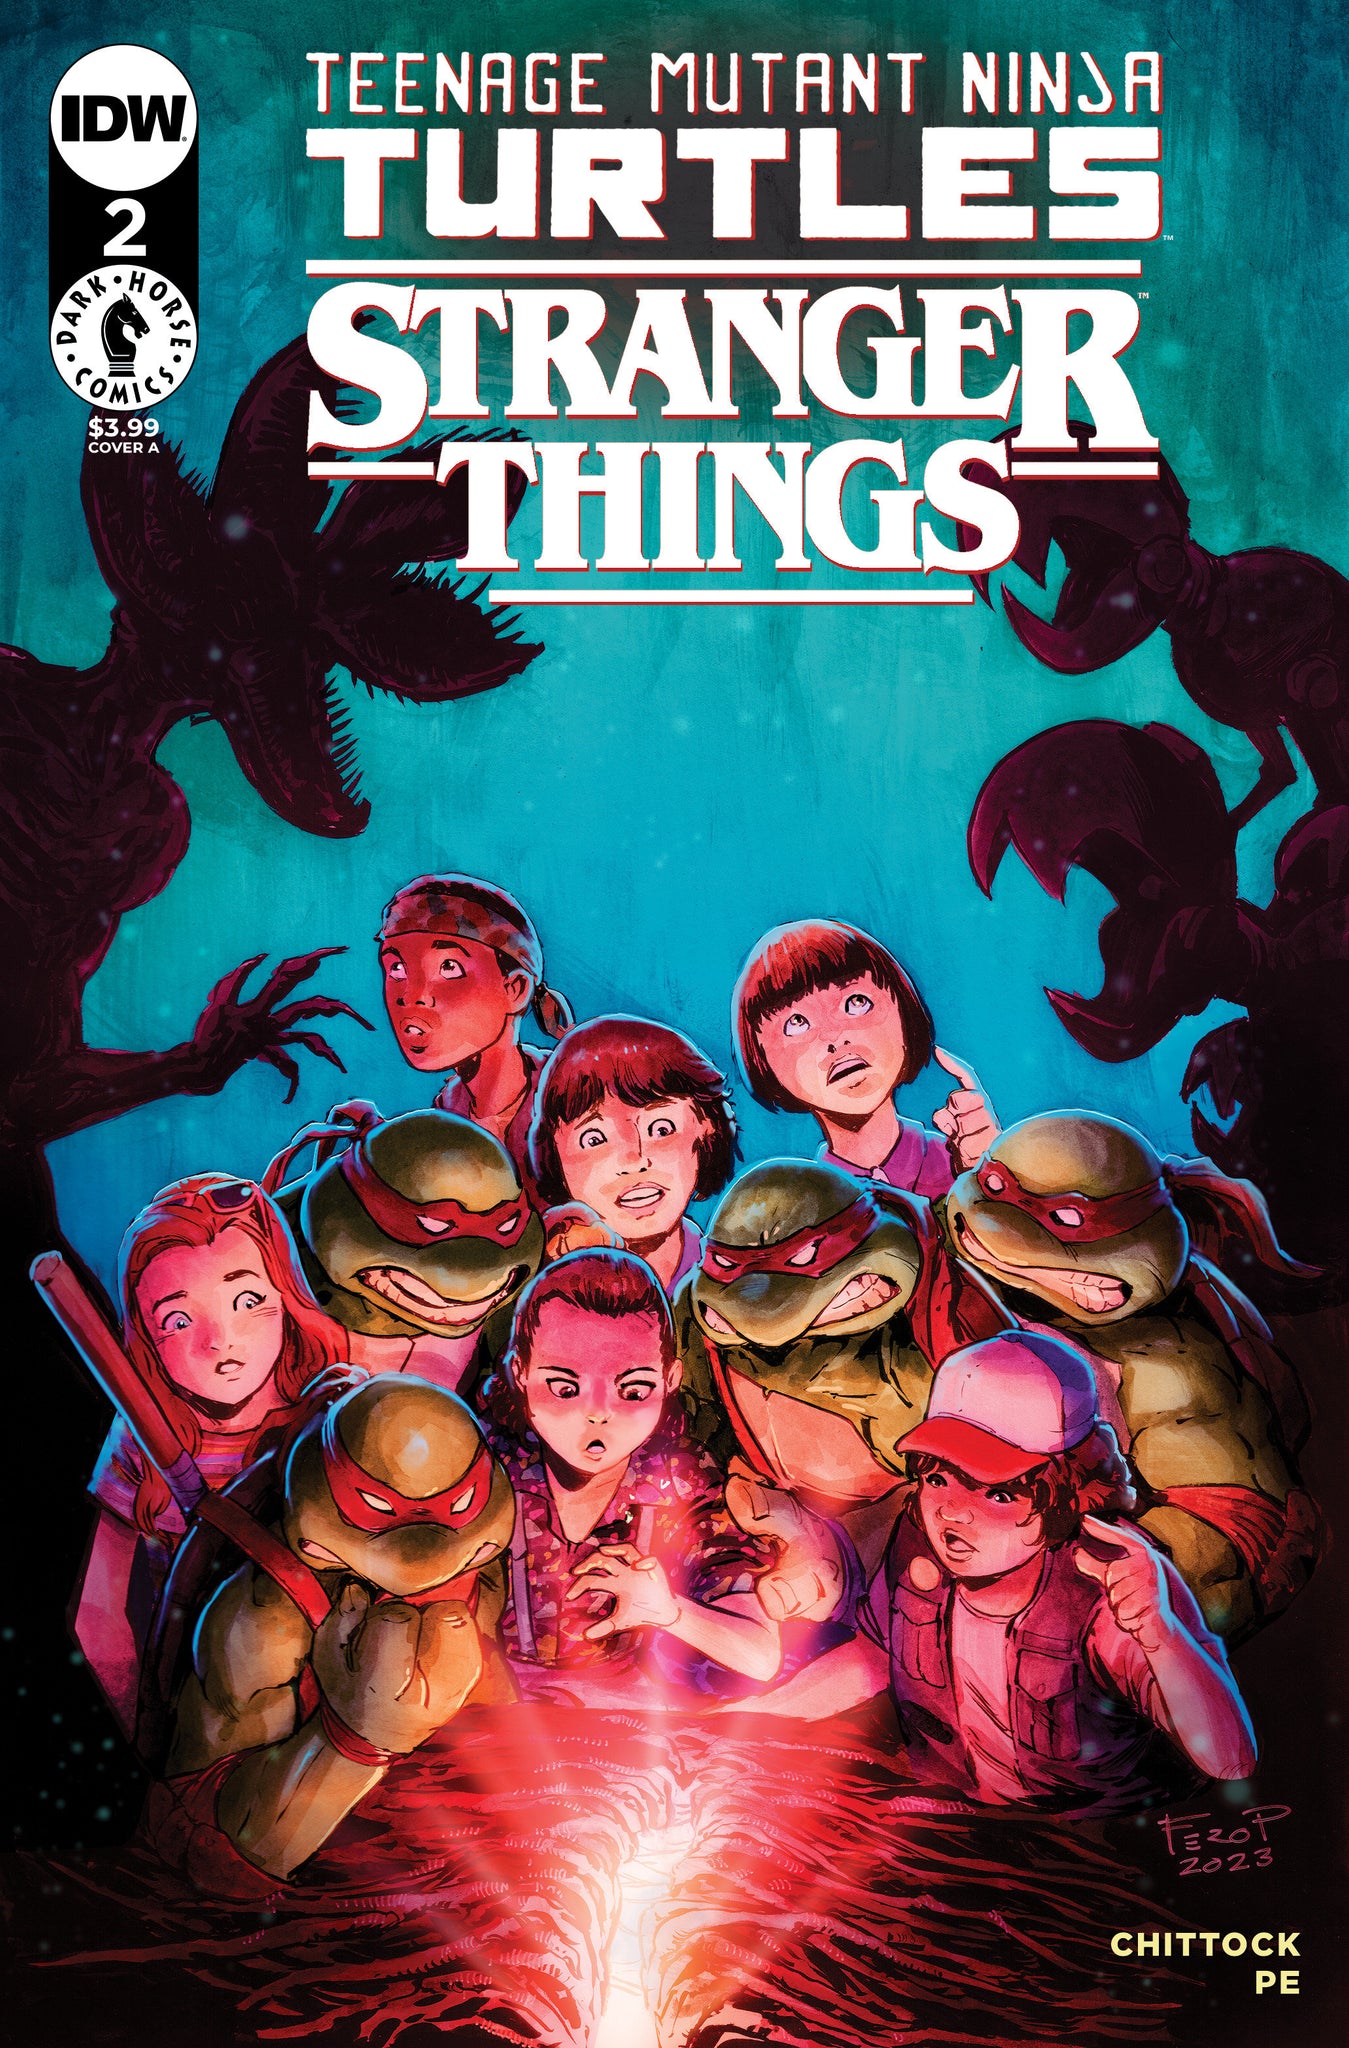 Teenage Mutant Ninja Turtles x Stranger Things #2